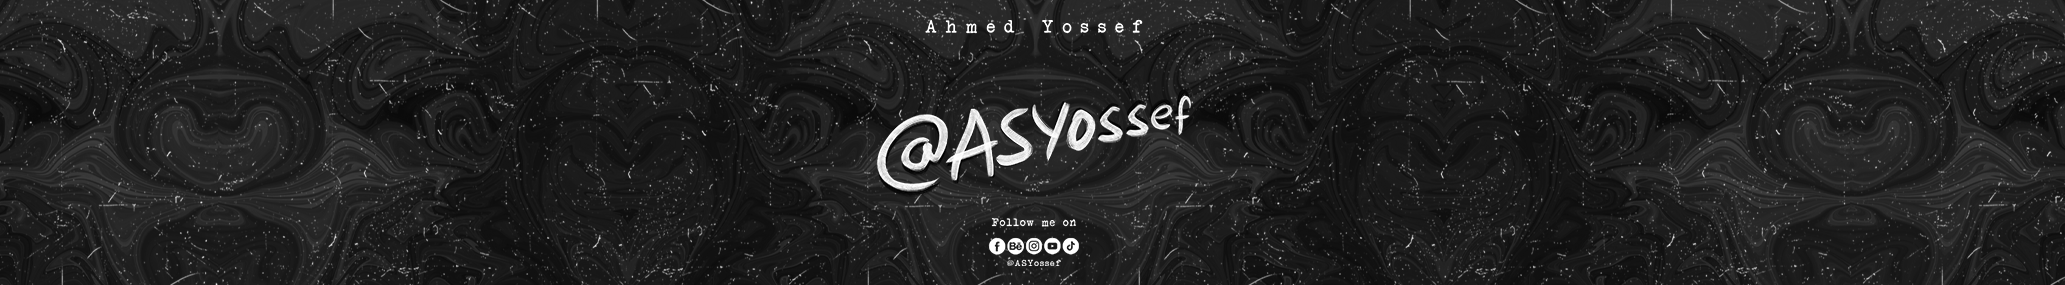 Banner de perfil de Ahmed S. Yossef